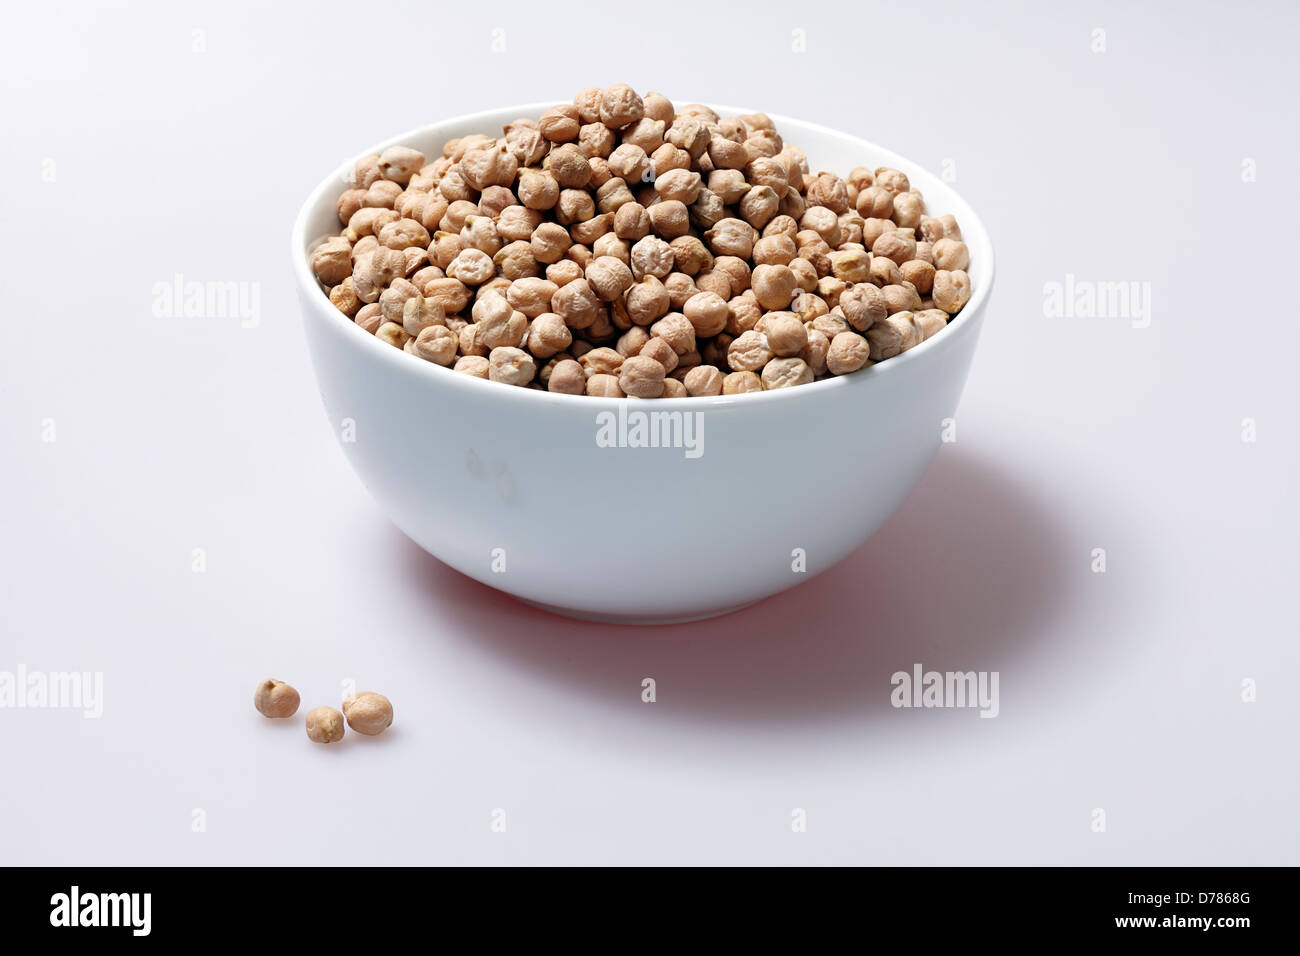 Bowl of Chickpeas (Cicer arietinum) or Garbanzo beans Stock Photo